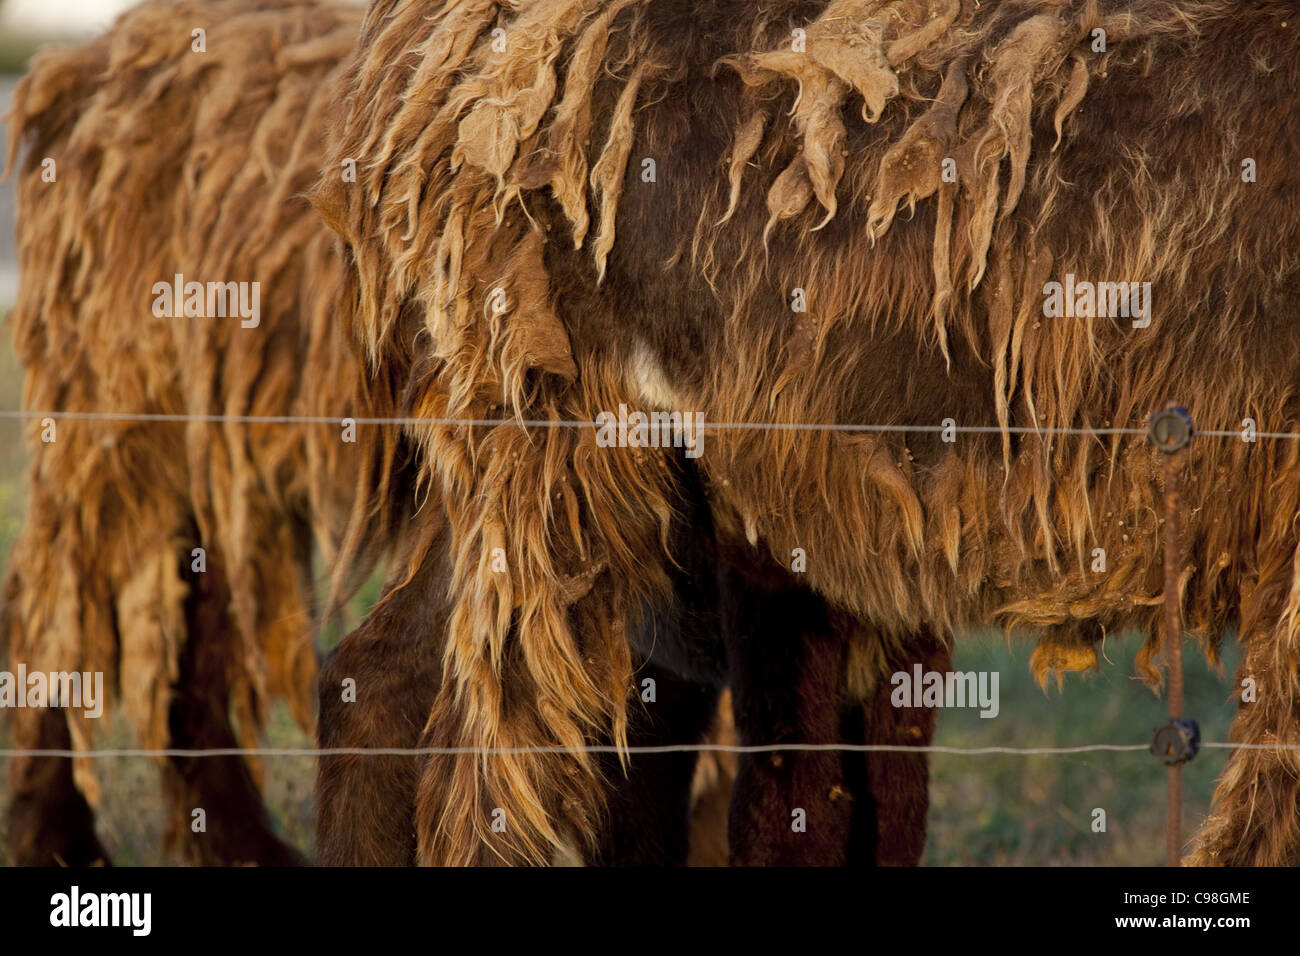 Close up immagine sulla spessa pelliccia aggrovigliati di un asino su l'île de Ré, Francia. Foto Stock